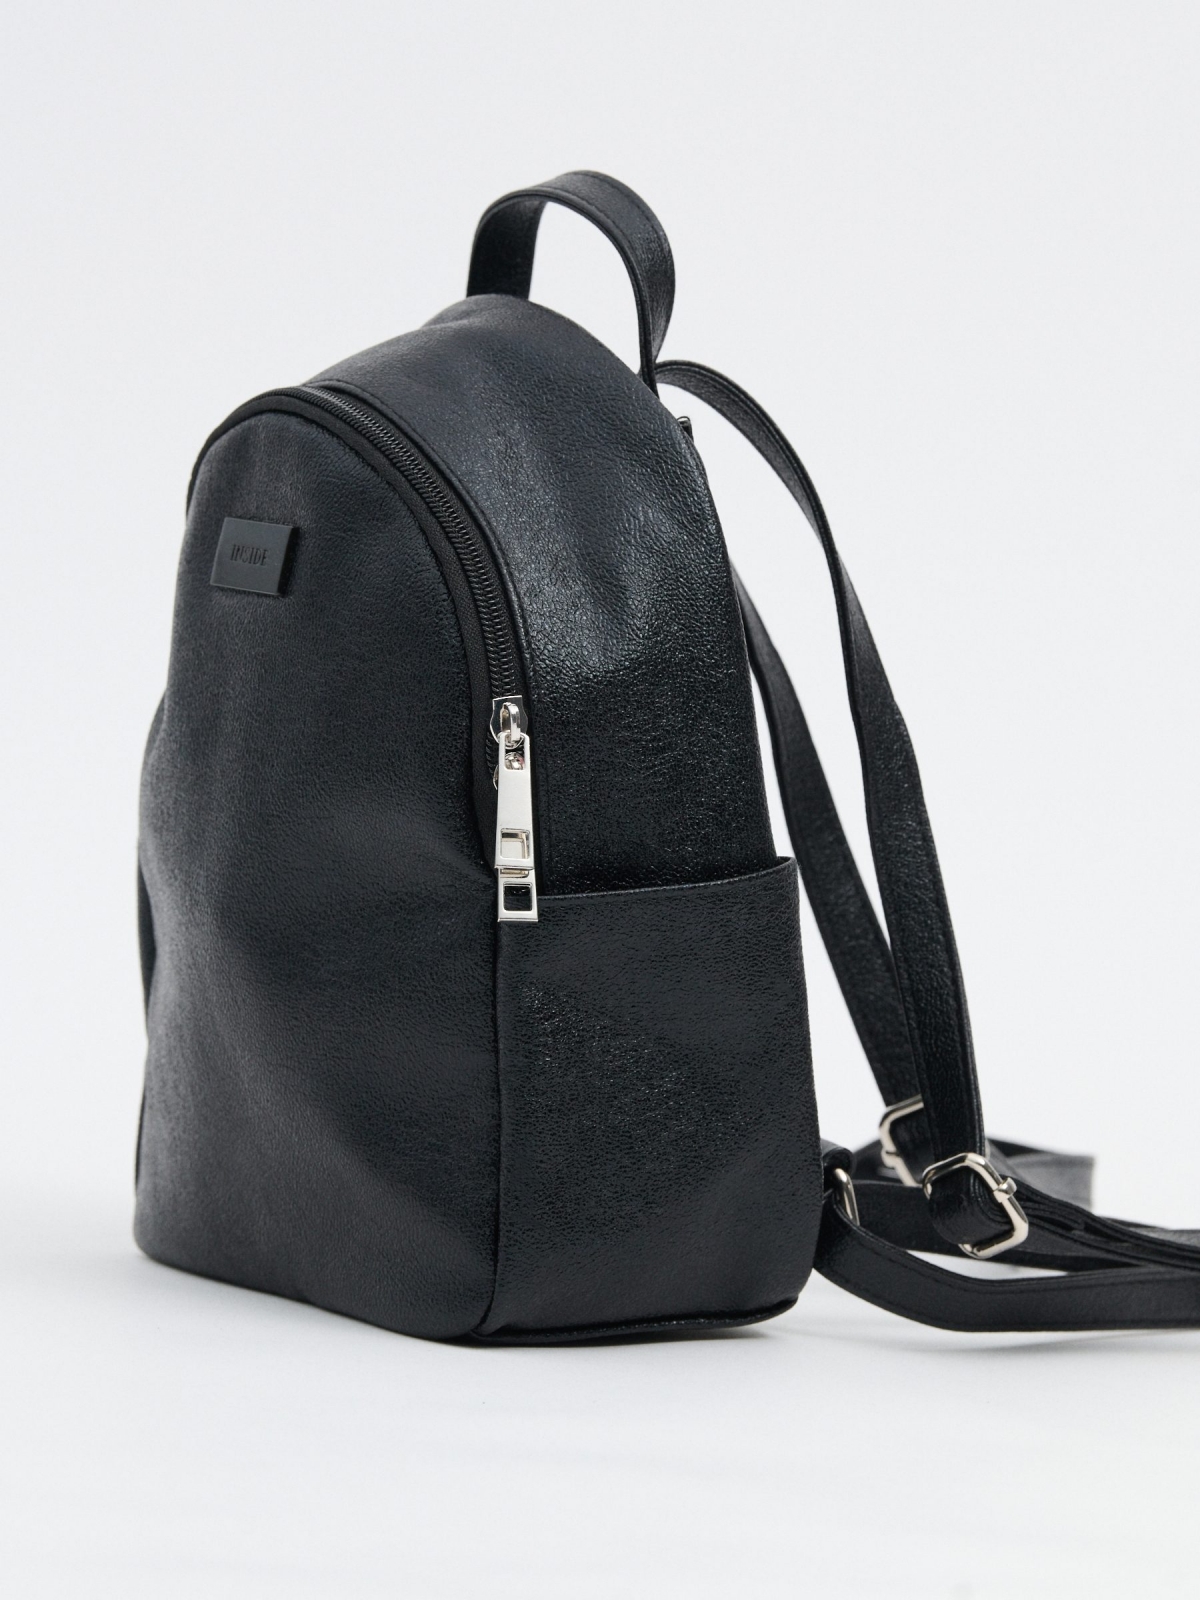 Black leather effect backpack black back view